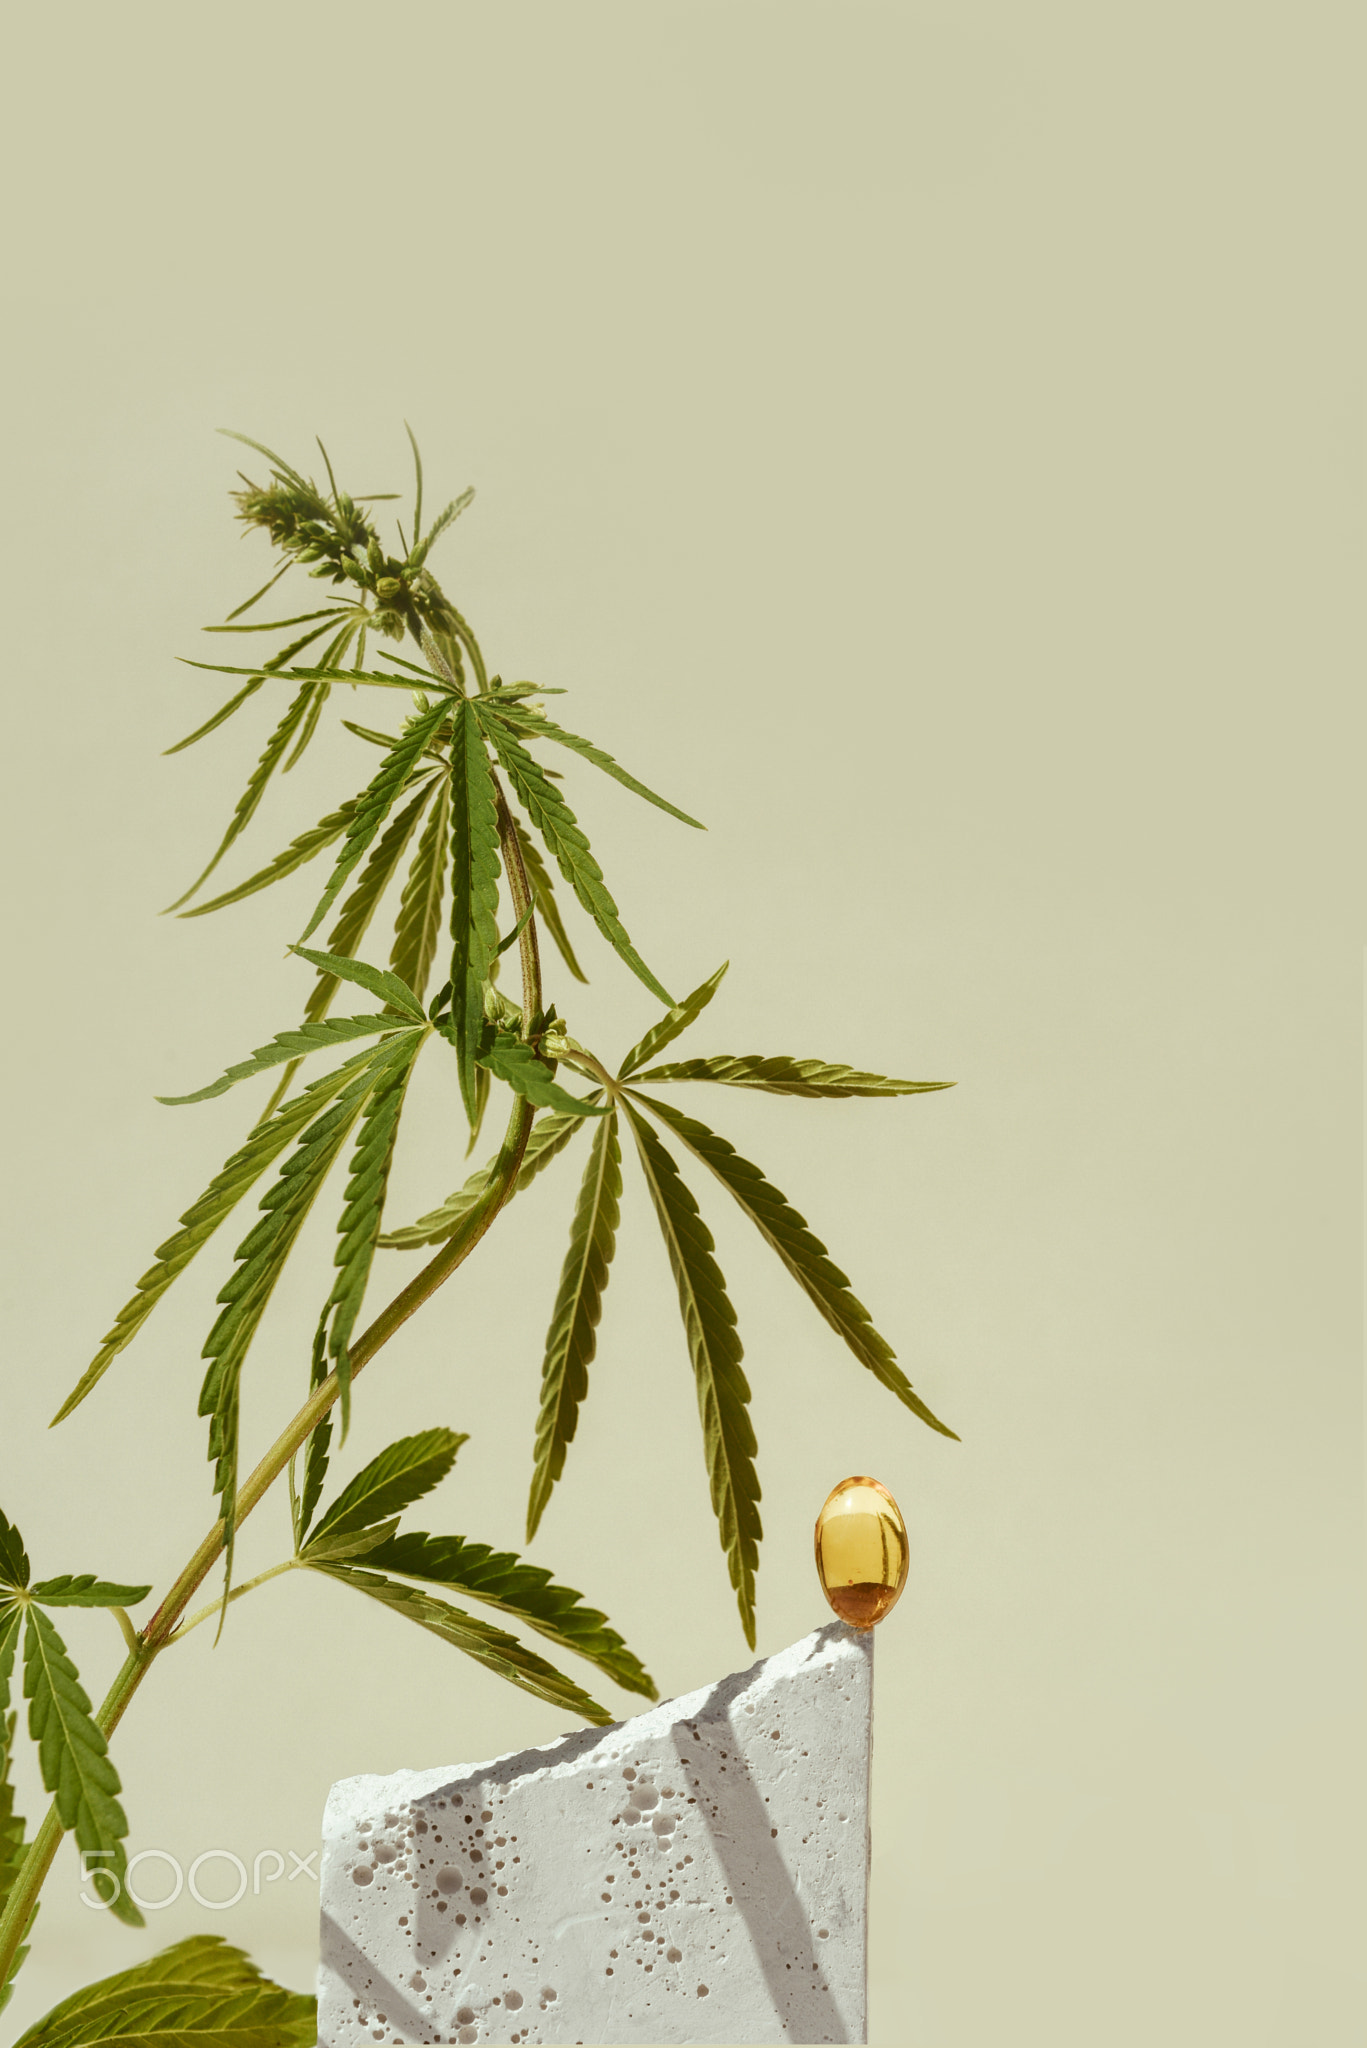 CBD oil in capsule and leaf of marijuana, cannabis